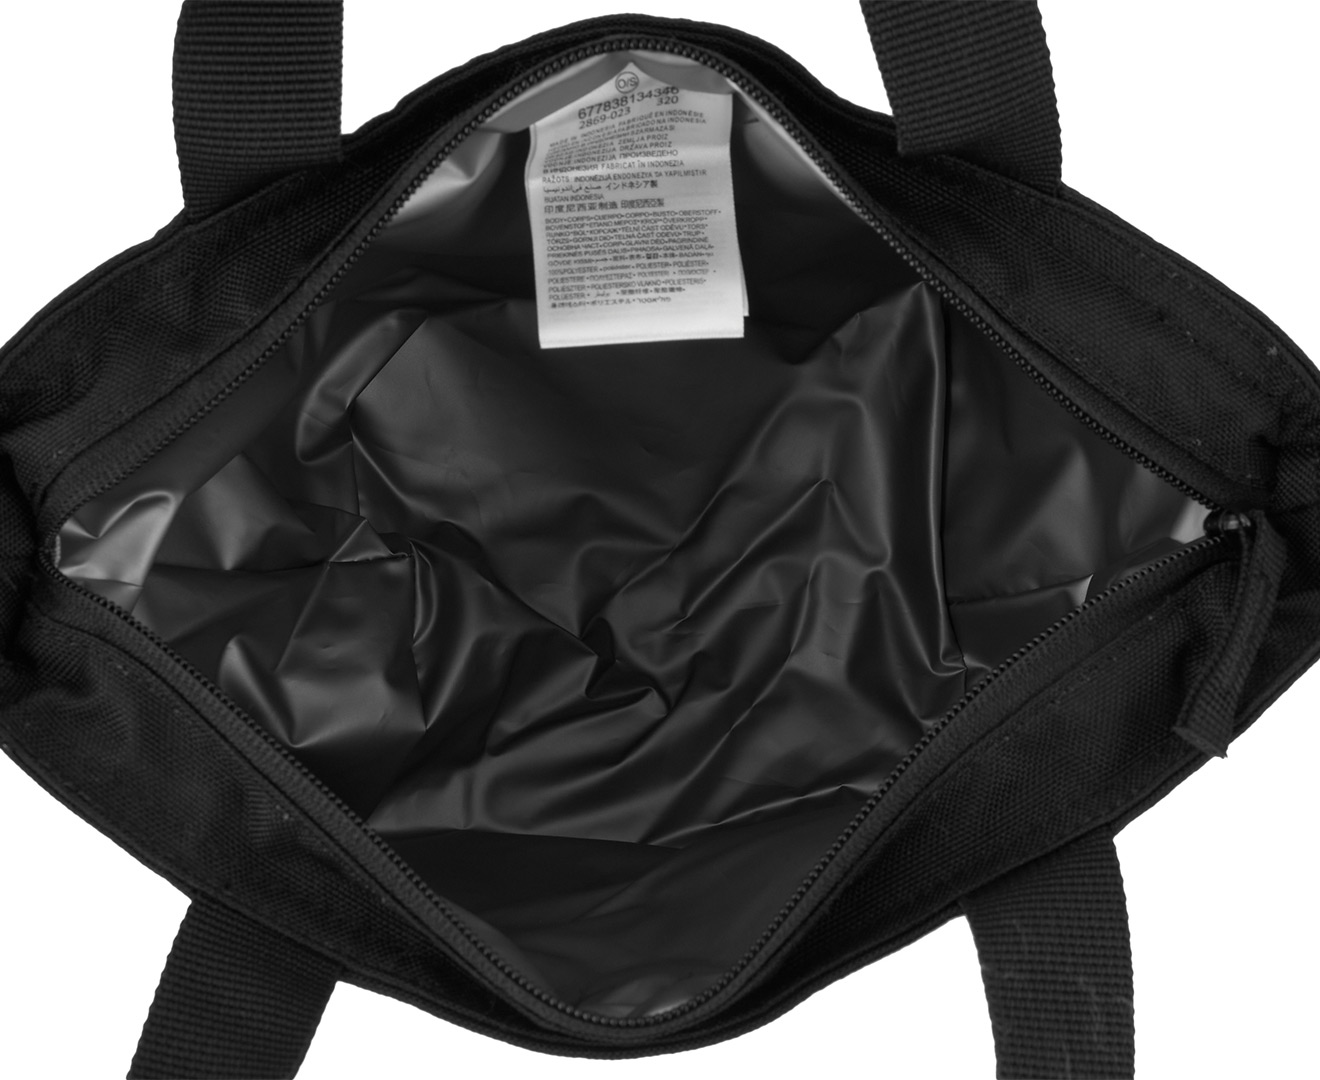 Nike Futura Fuel Tote Bags 'Black' - 9A2869A-014